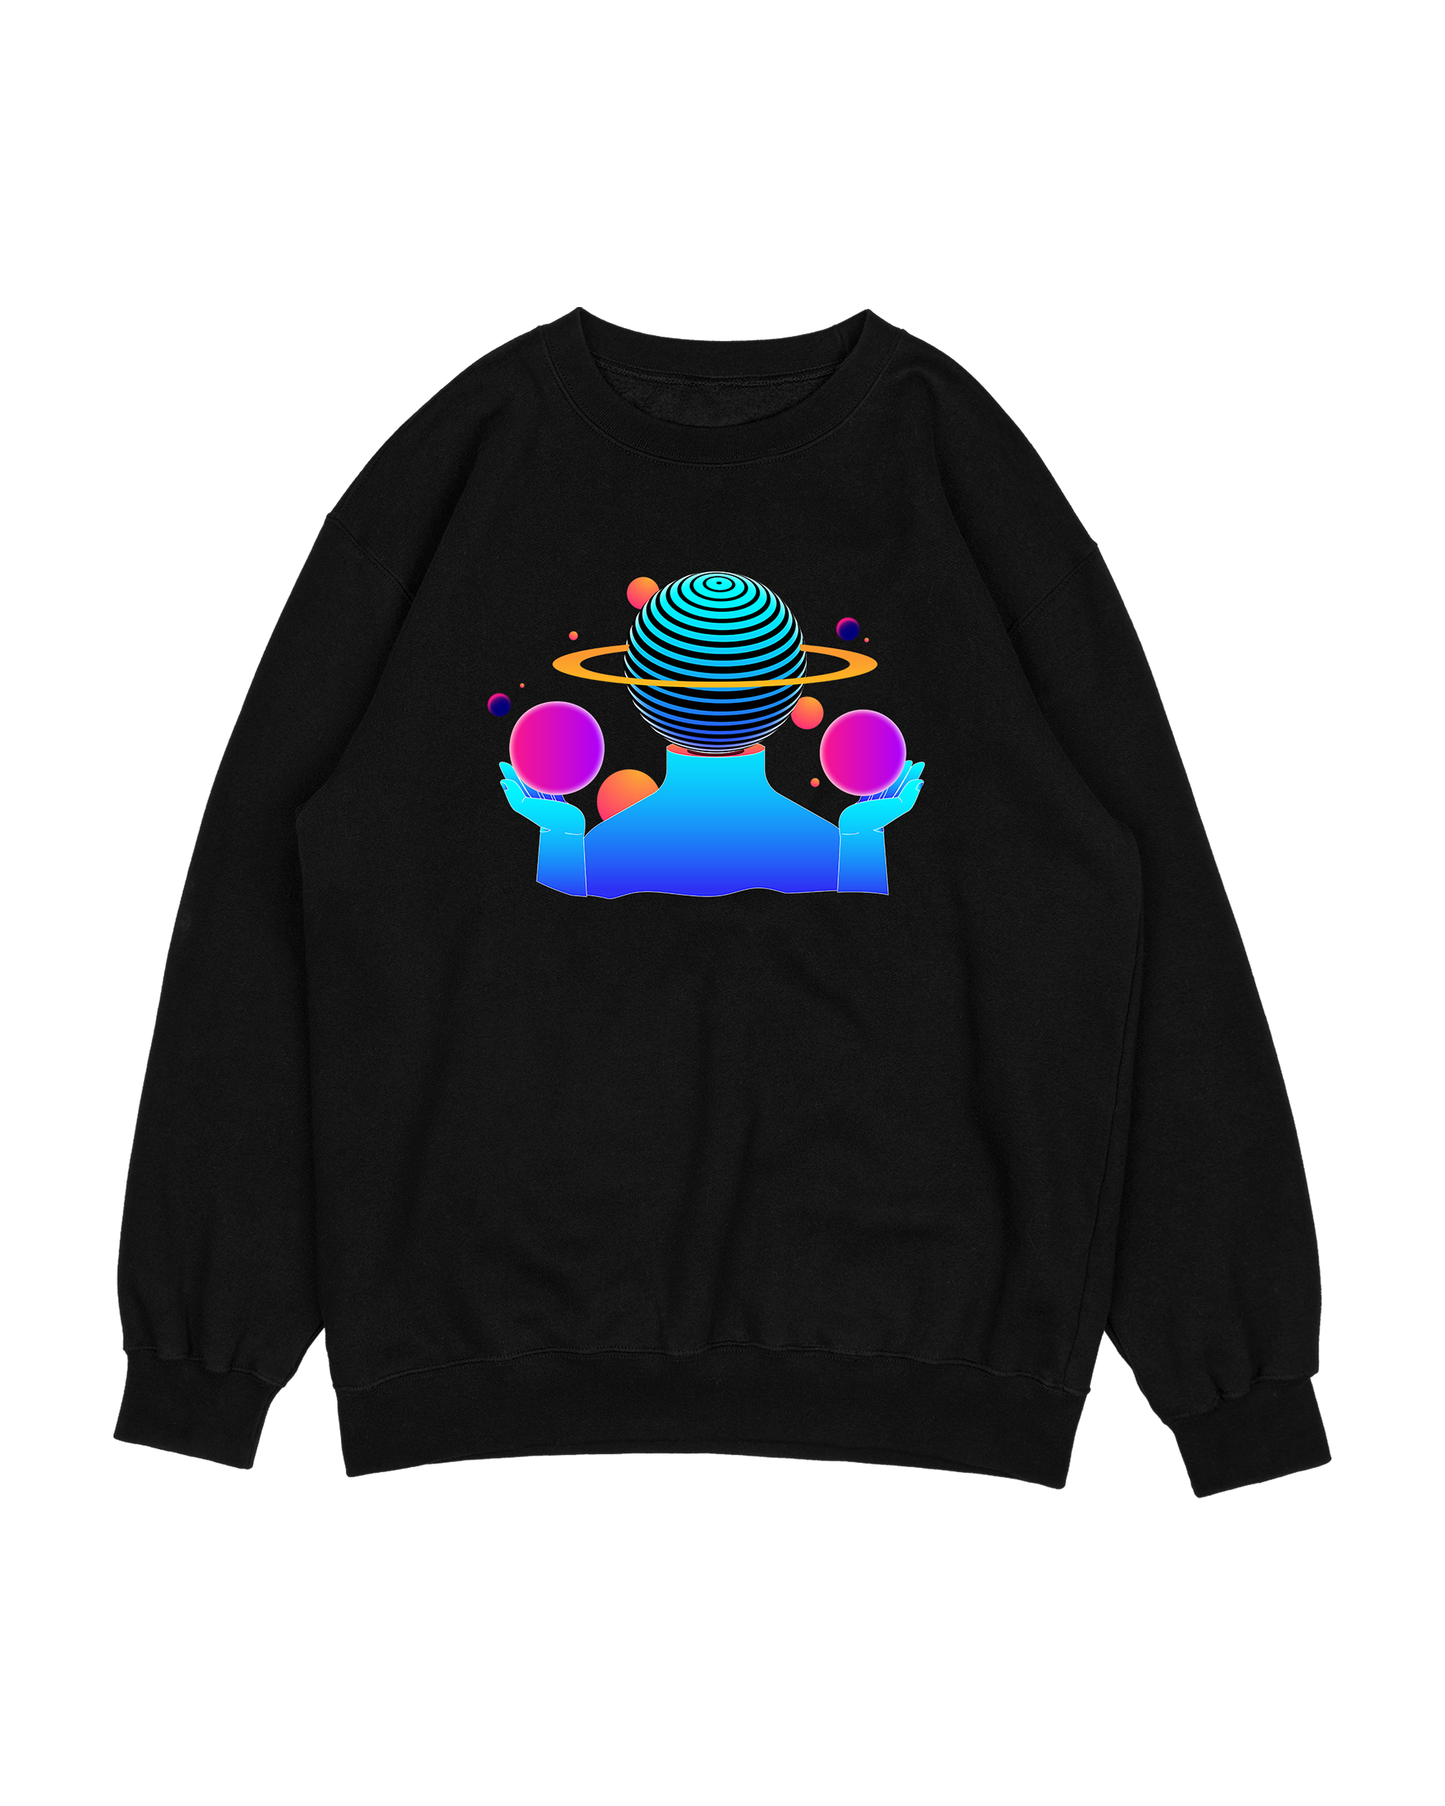 Physco Saturn Sweatshirt